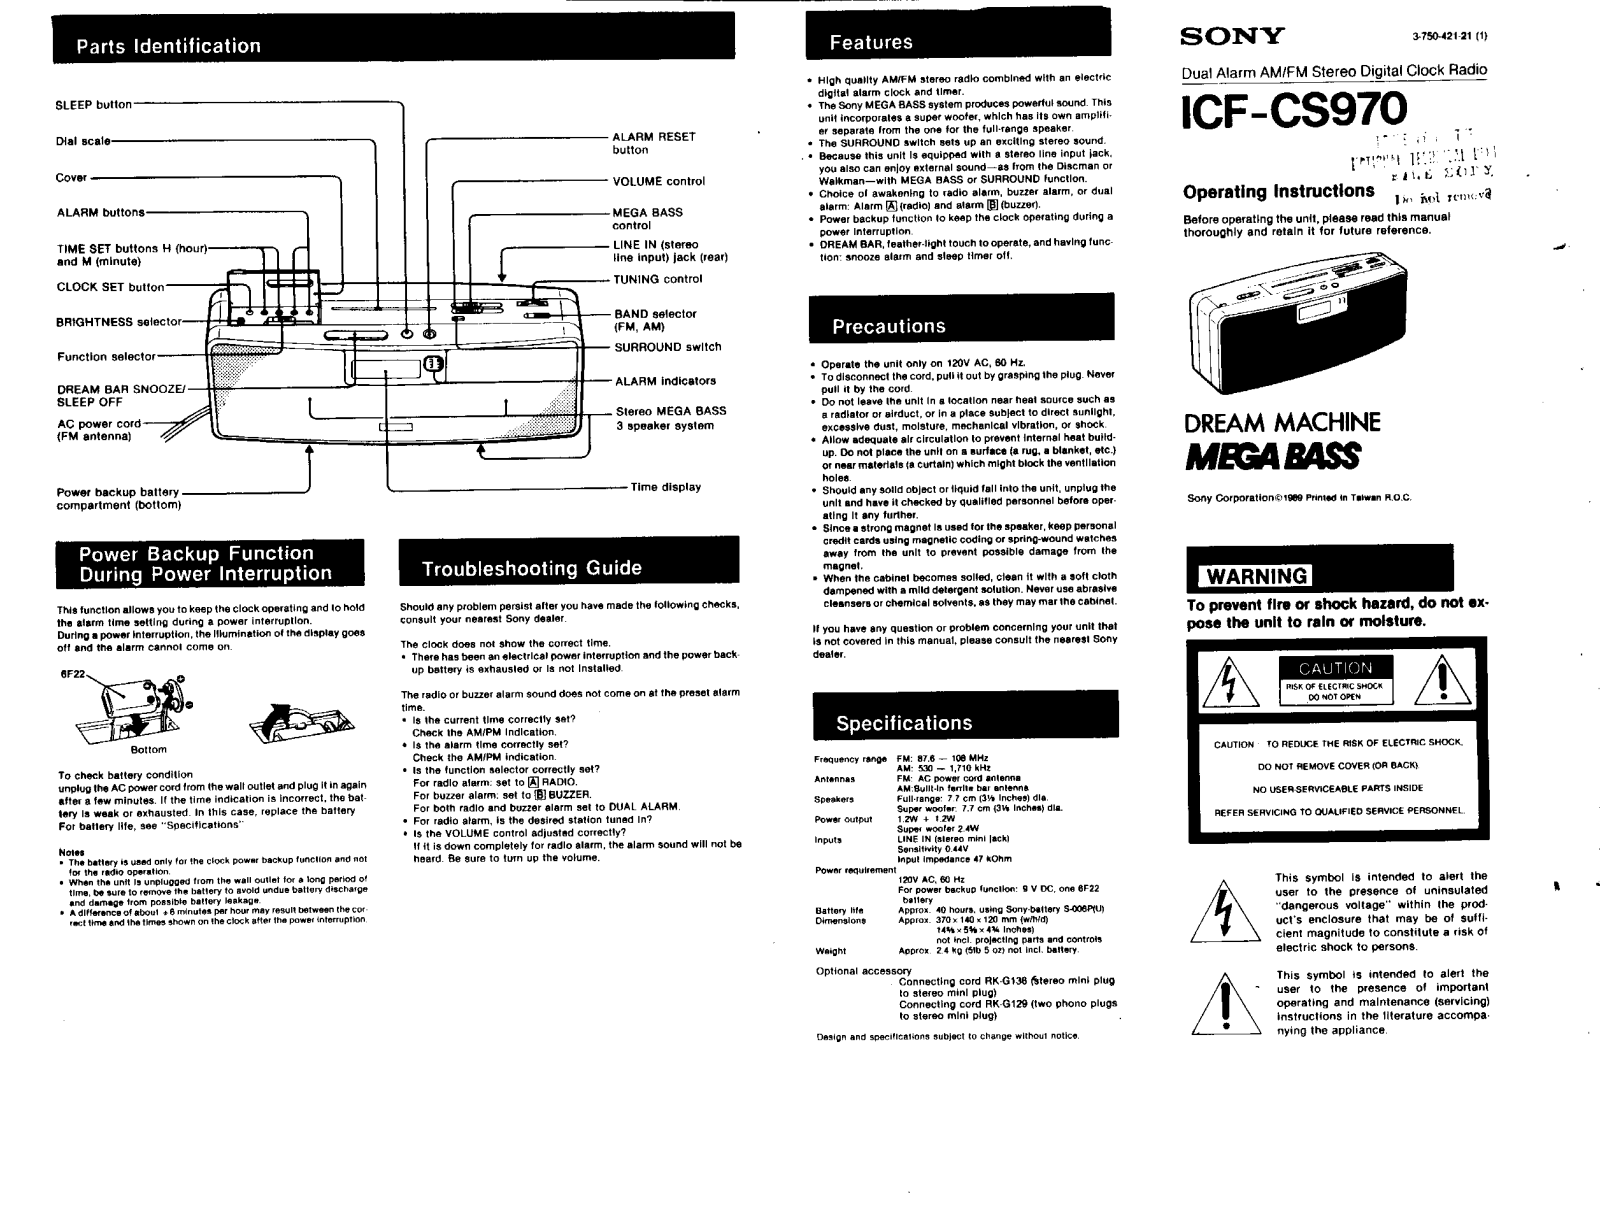 Sony ICF-CS970 Operating Instructions